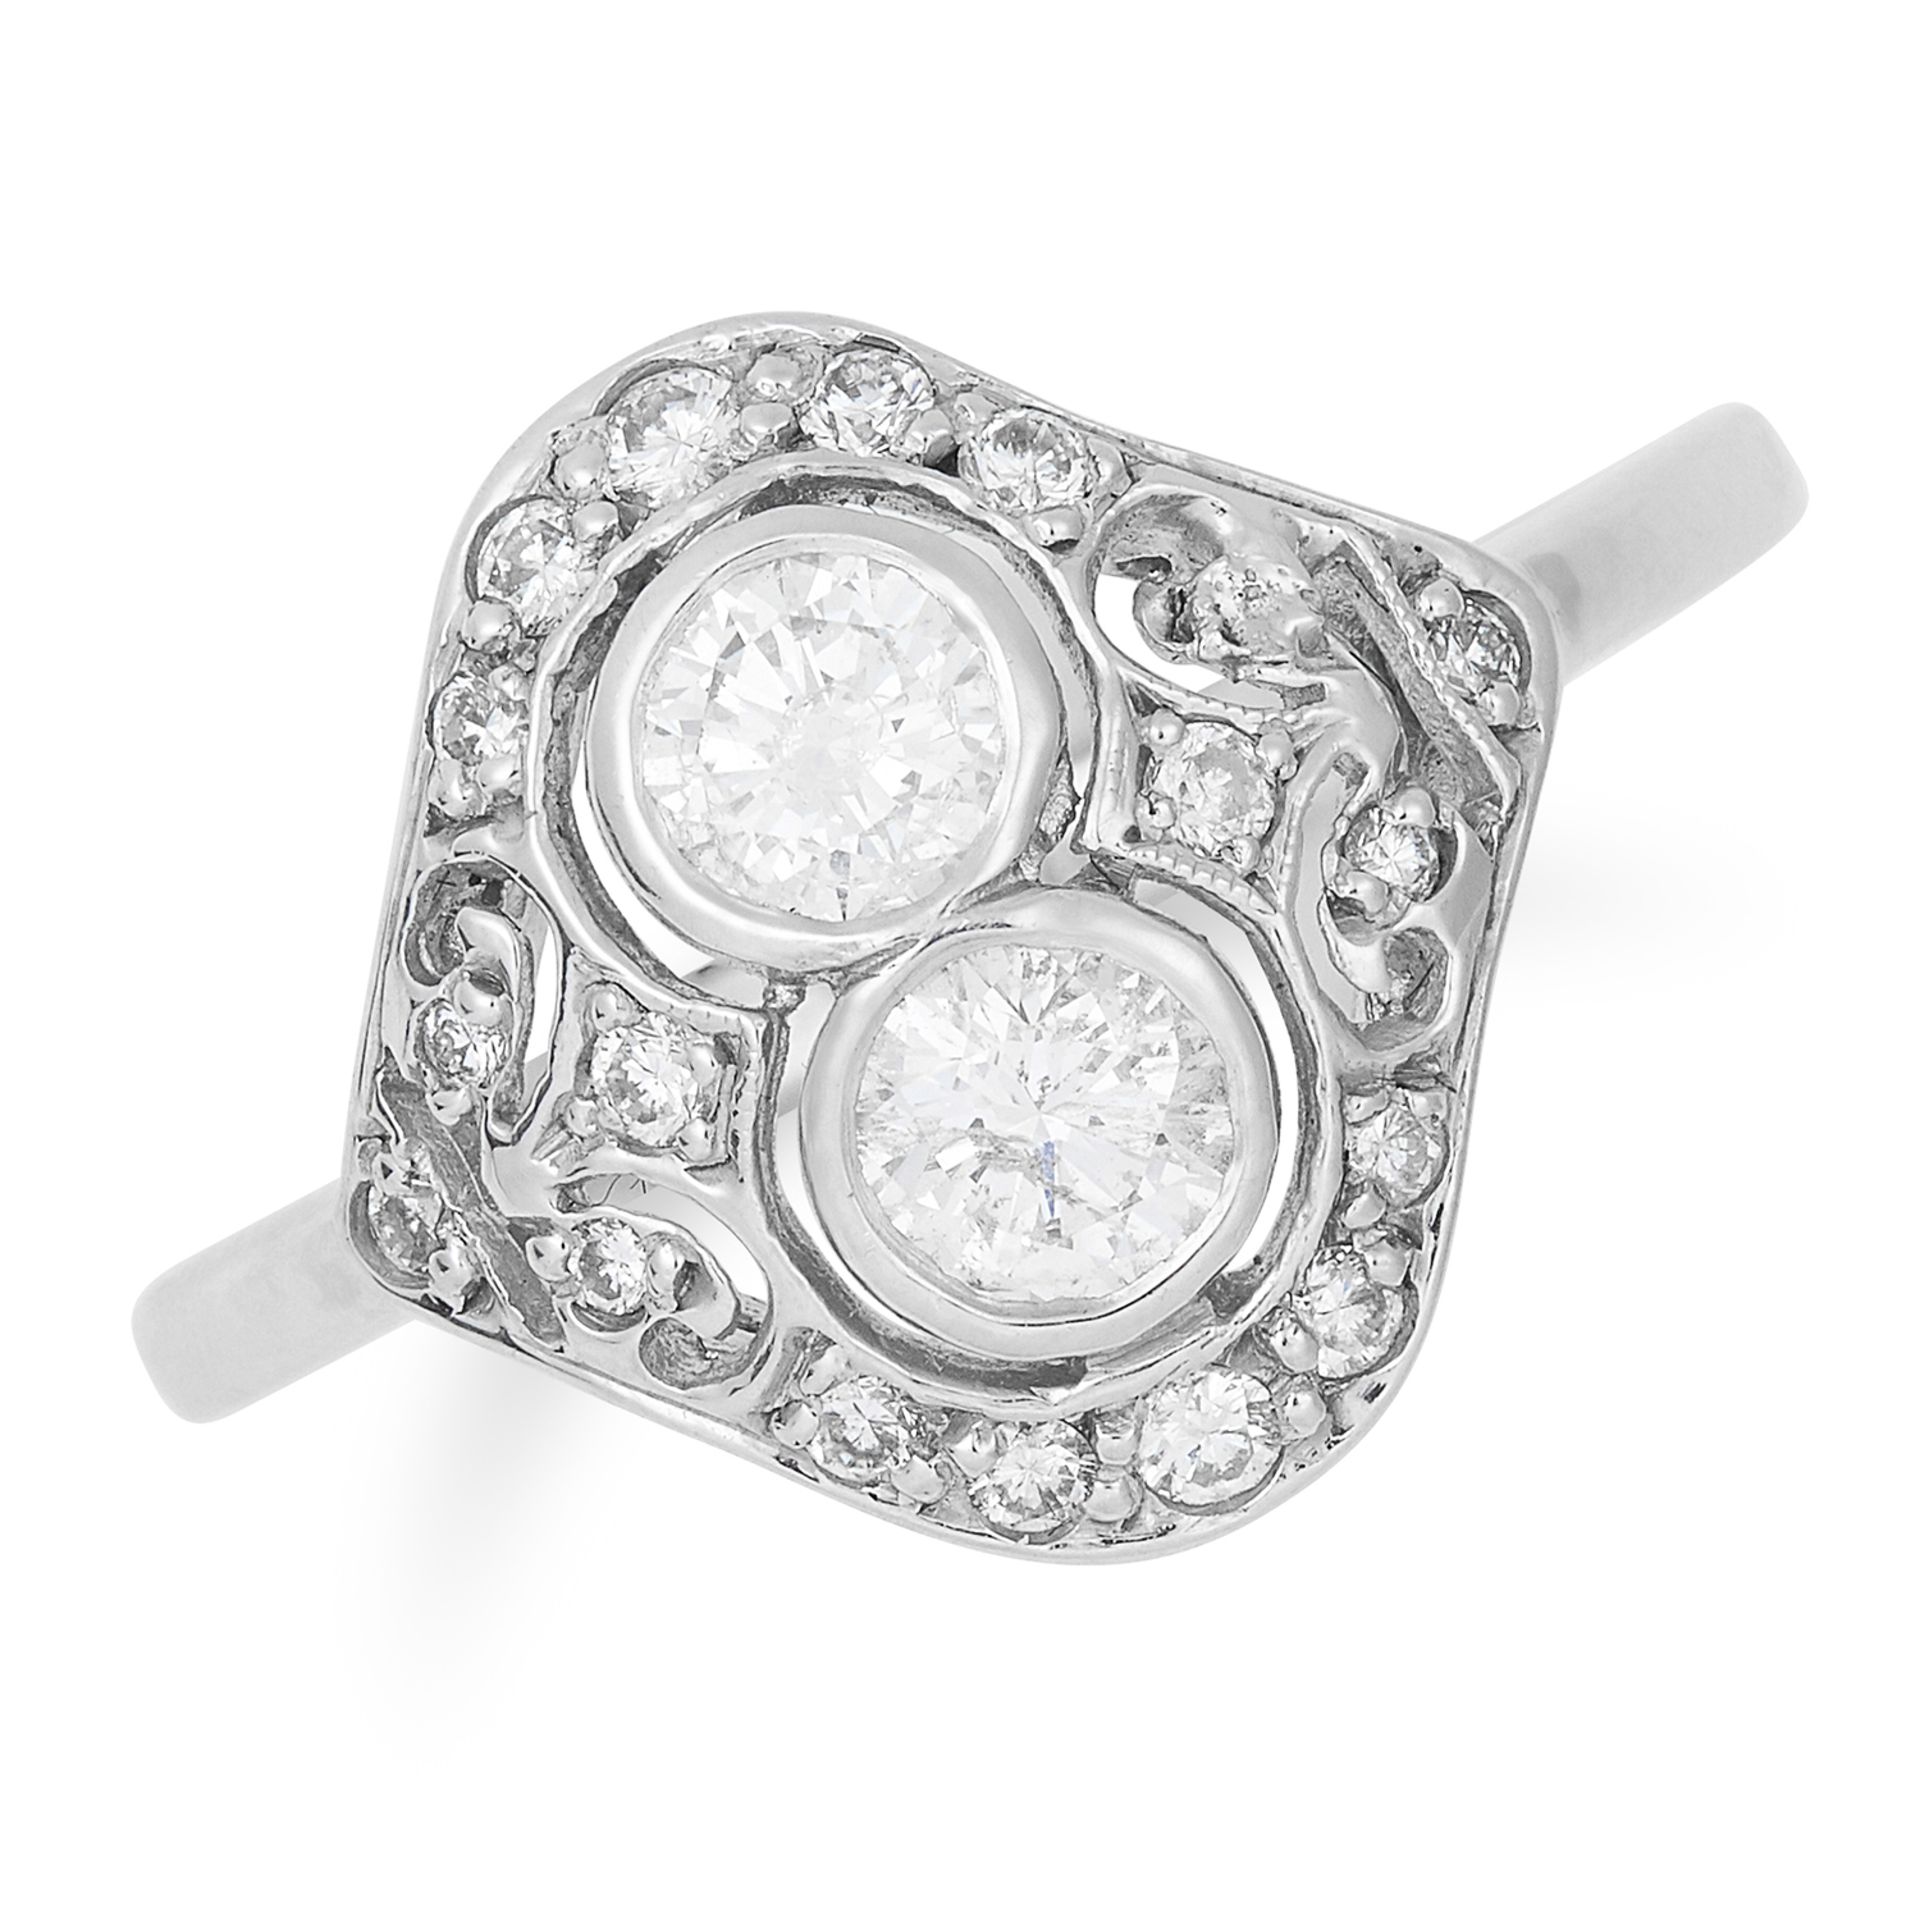 ANTIQUE ART DECO DIAMOND RING set with round cut diamonds, size N / 6.5, 3.3g.